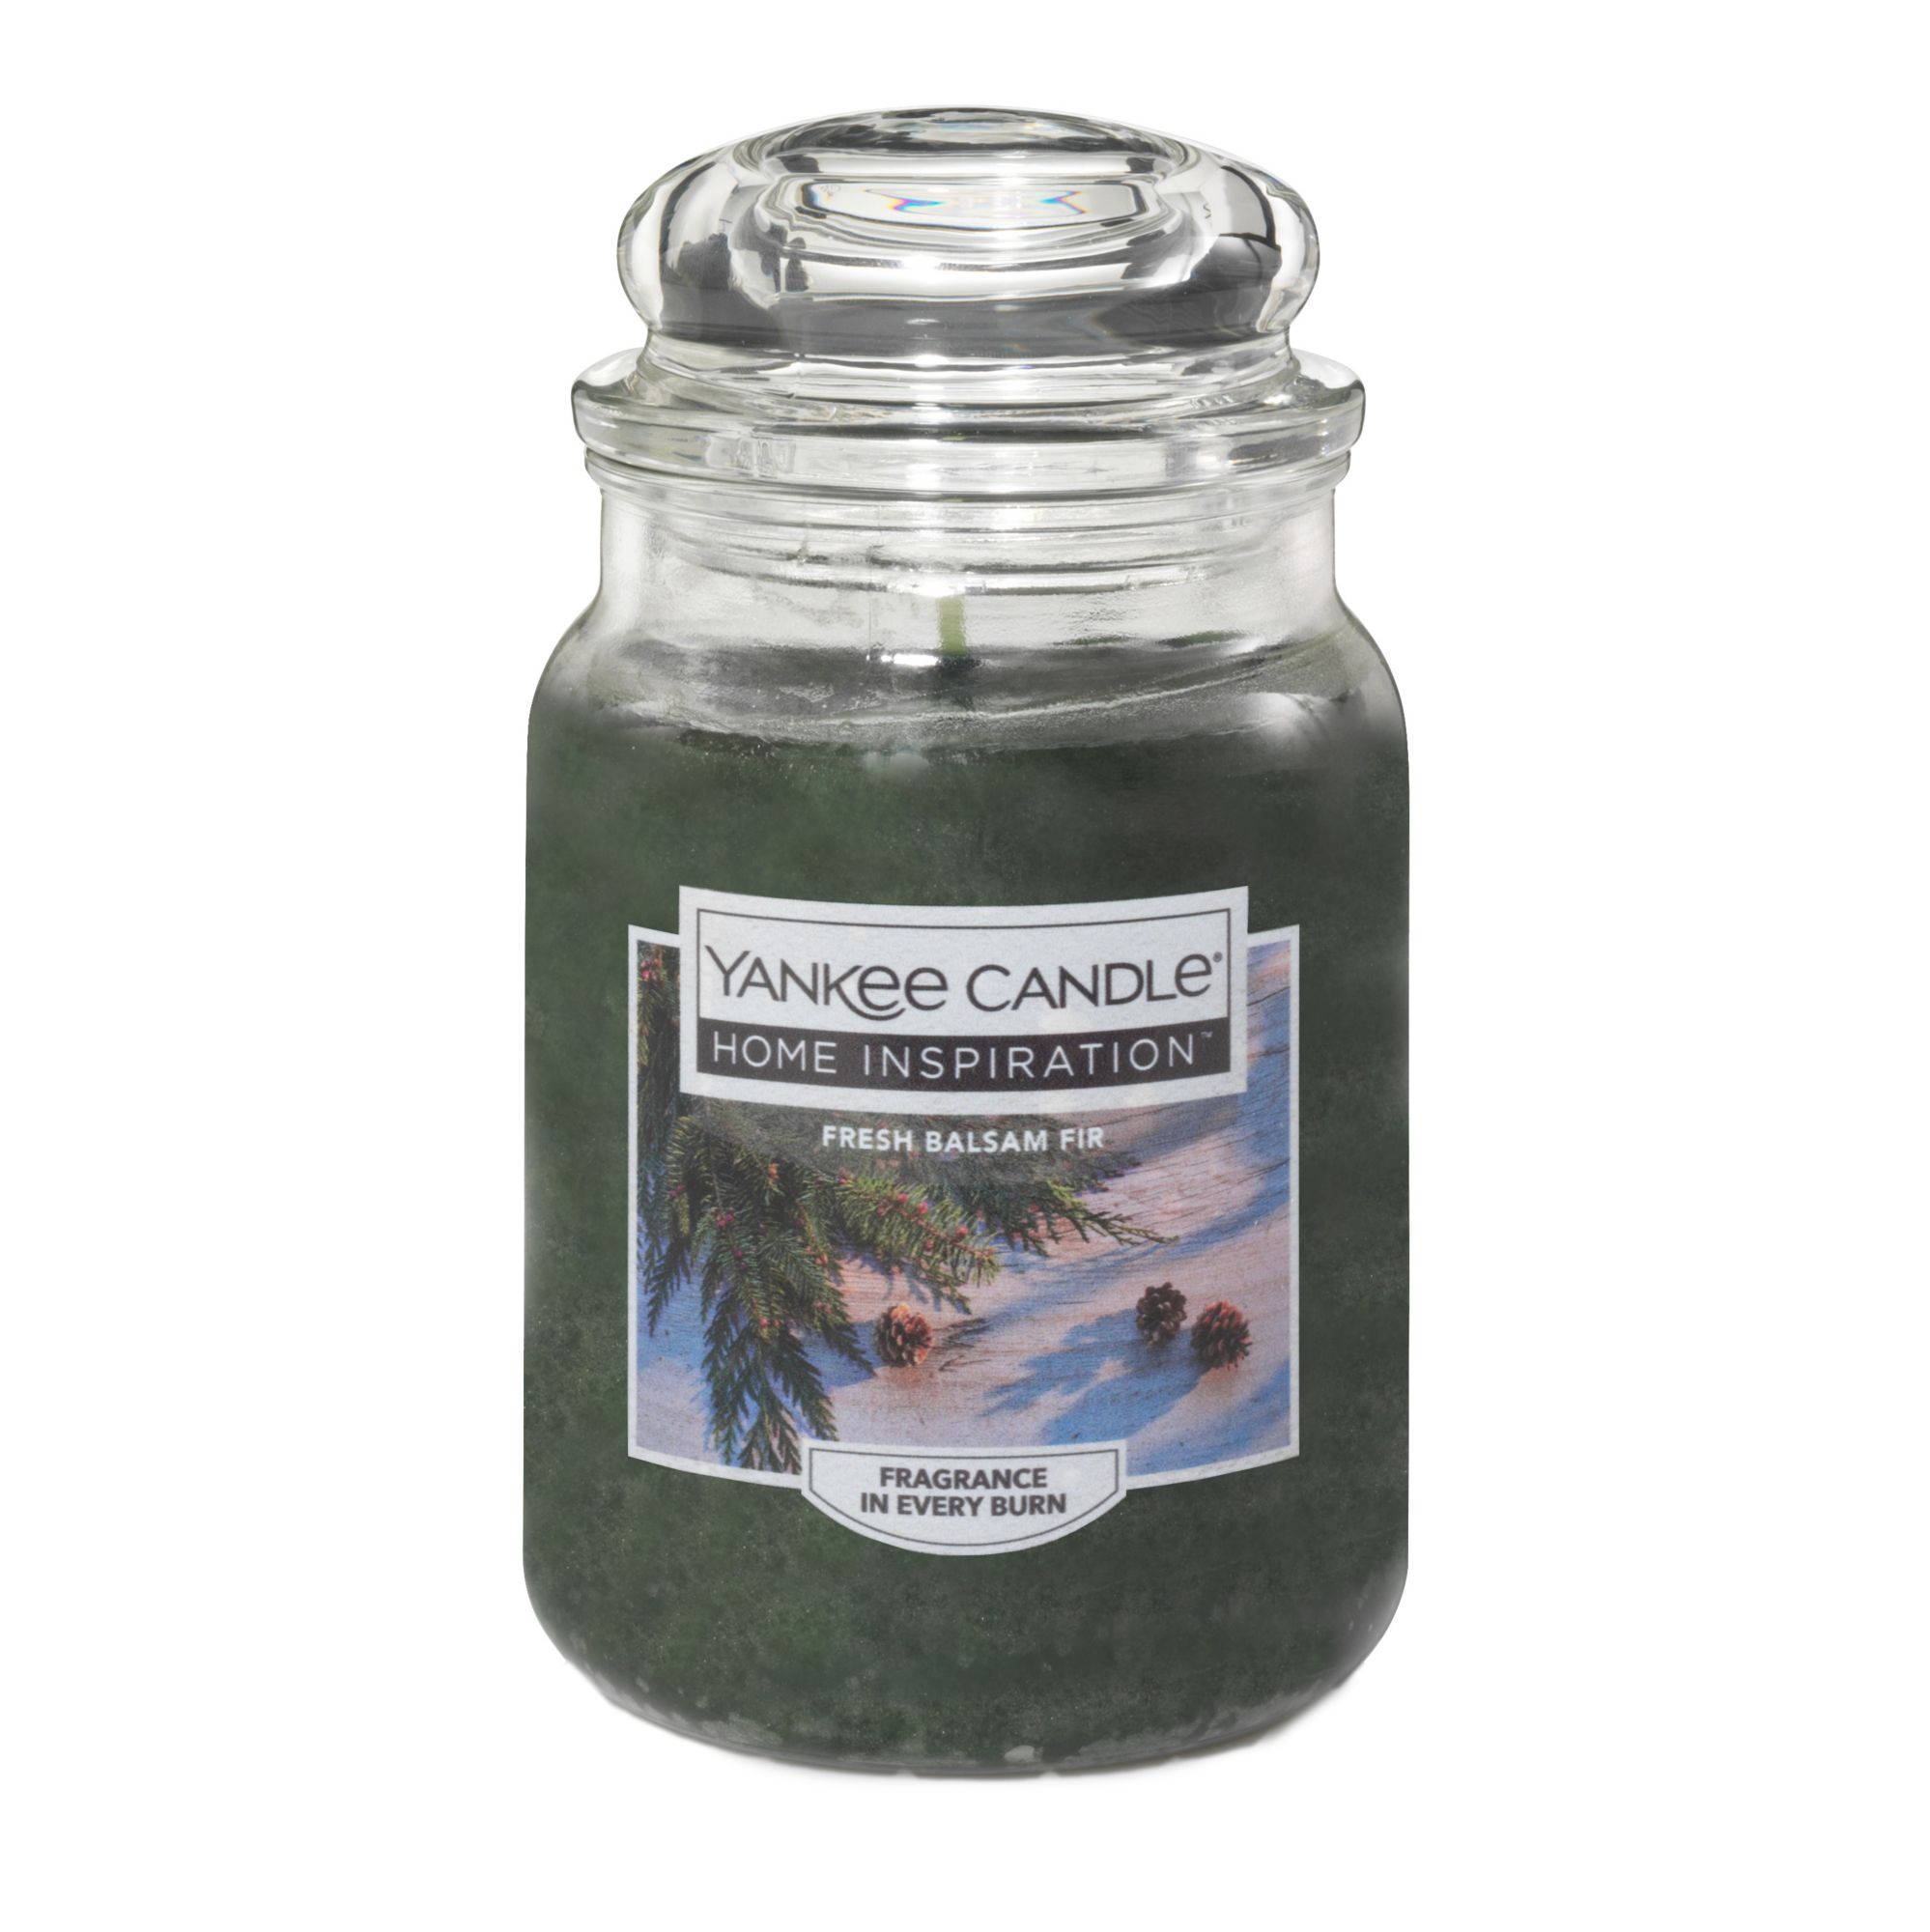 Yankee Candle Jar Candle, 19 oz. - Fresh Balsam Fir | BJ's Wholesale Club